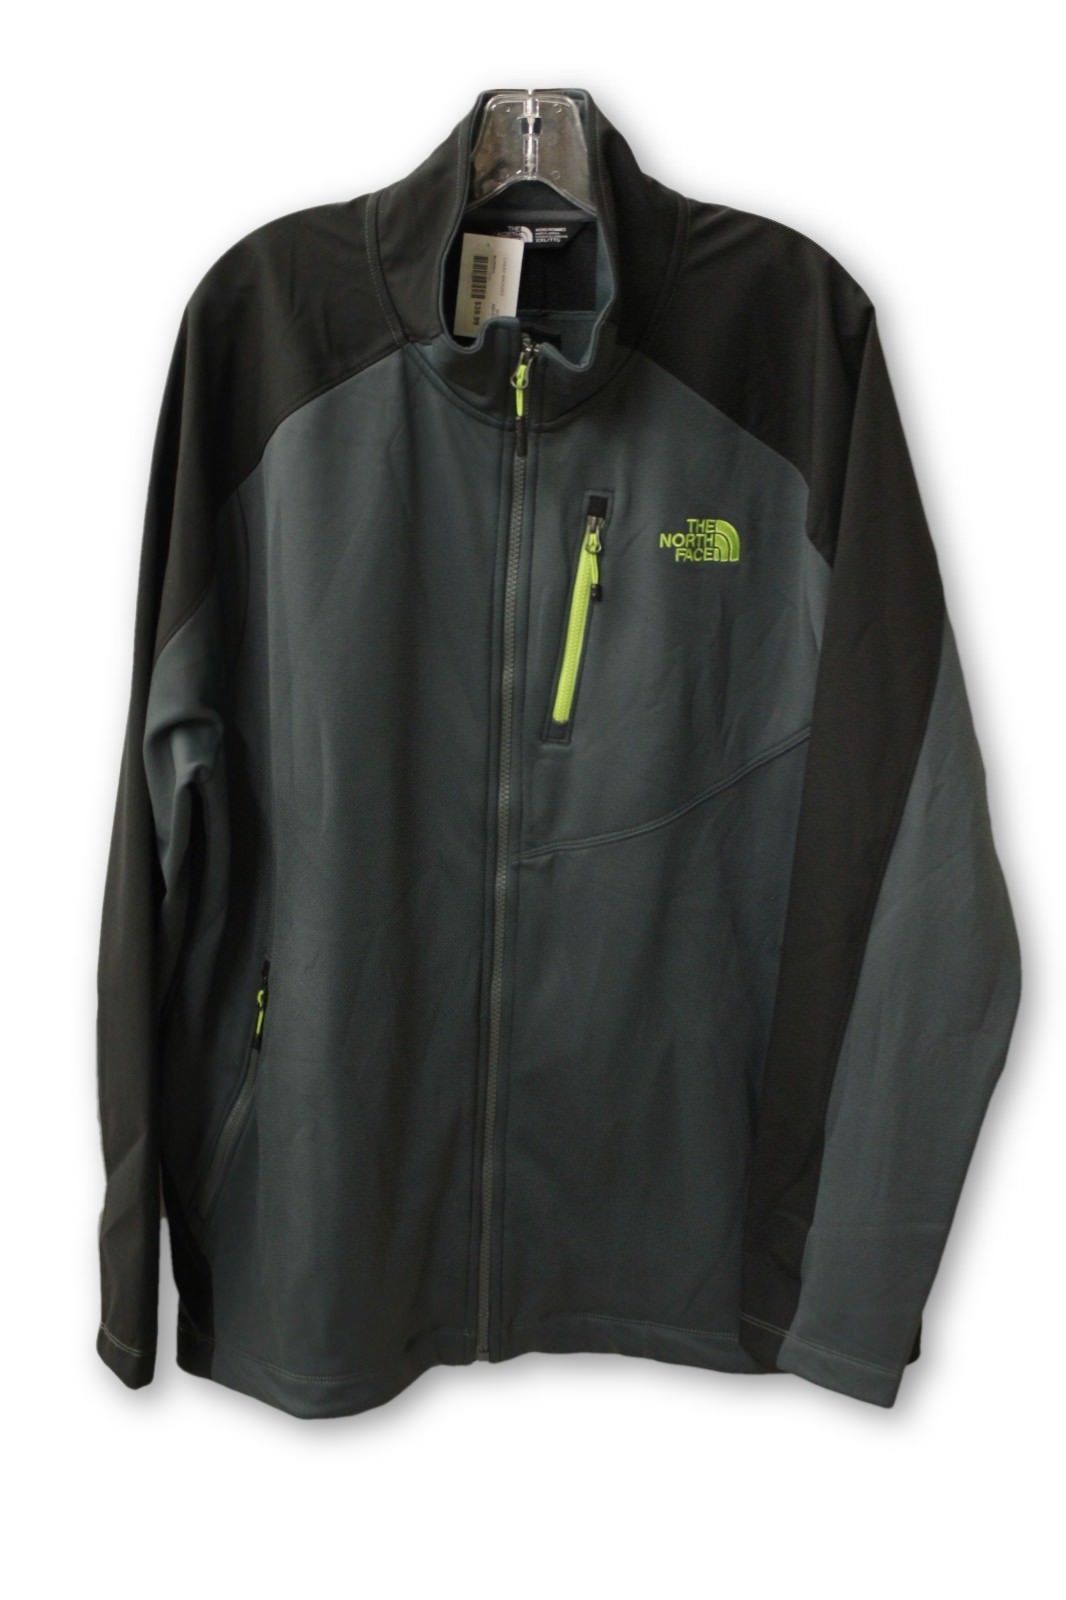 North Face Men's Dark Green Zip Up Athletic Jacket 2XL - $85.09